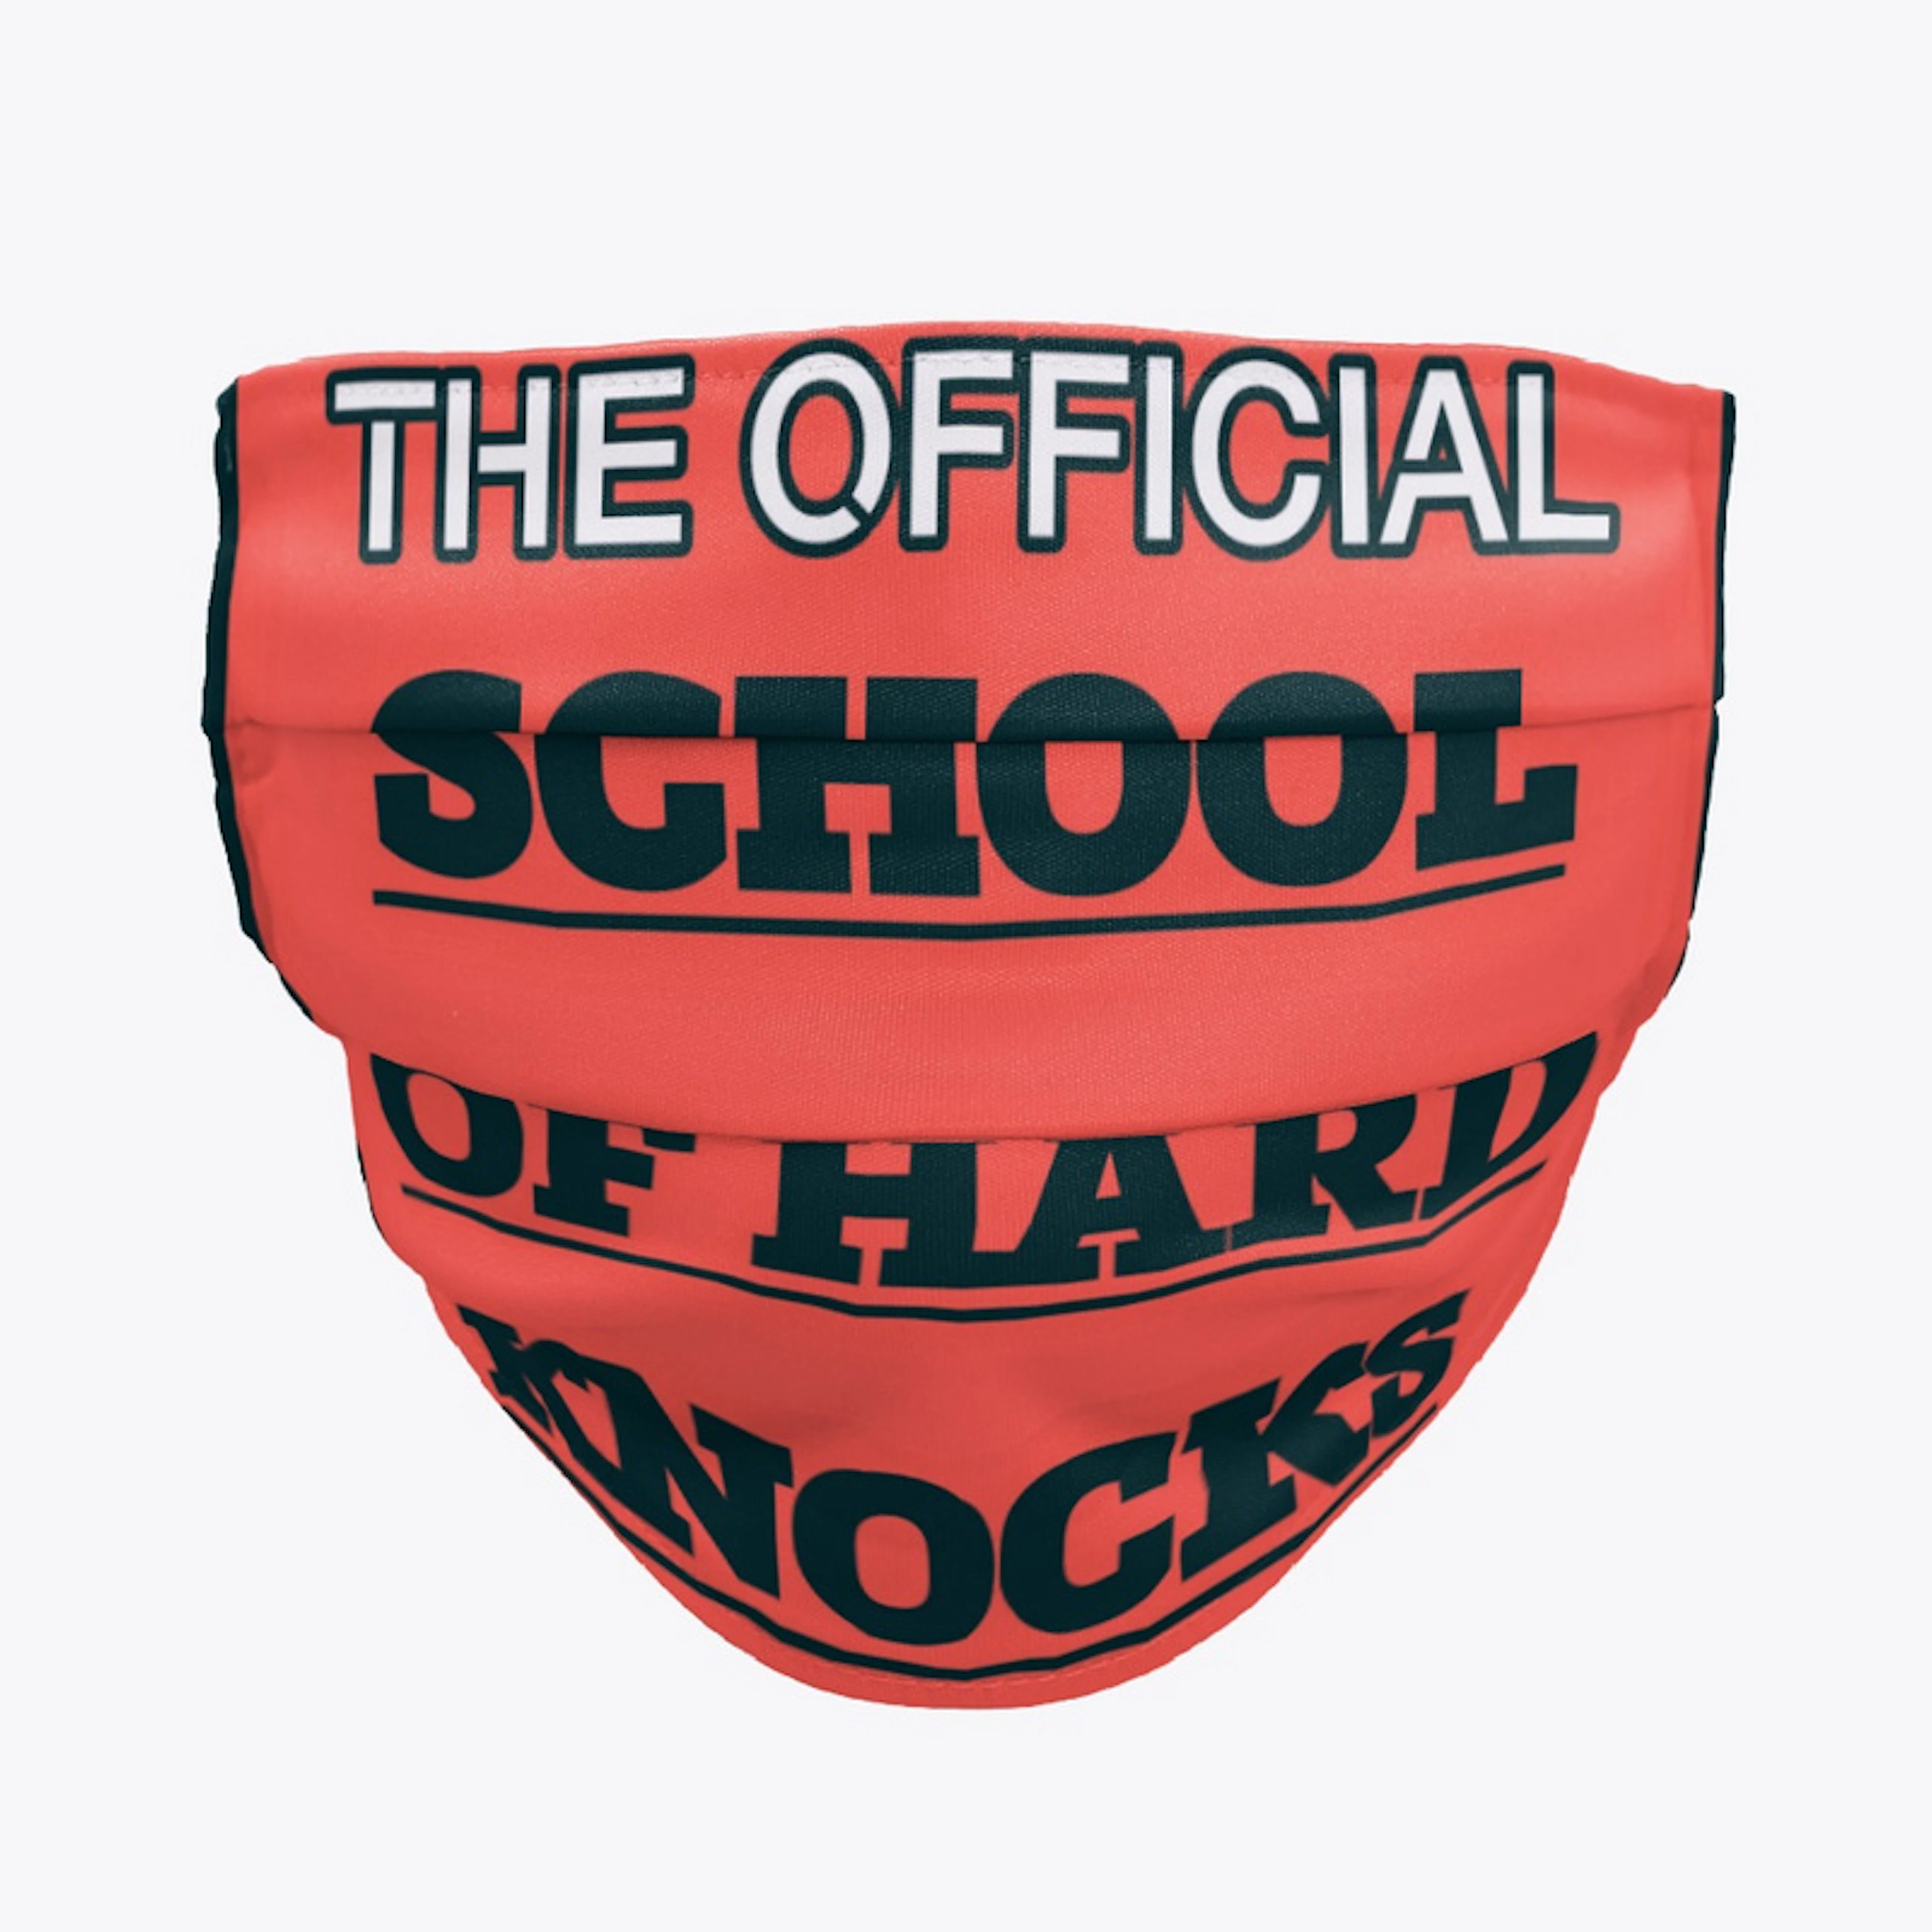 SCHOOL OF HARD KNOCKS by Nick Kabe